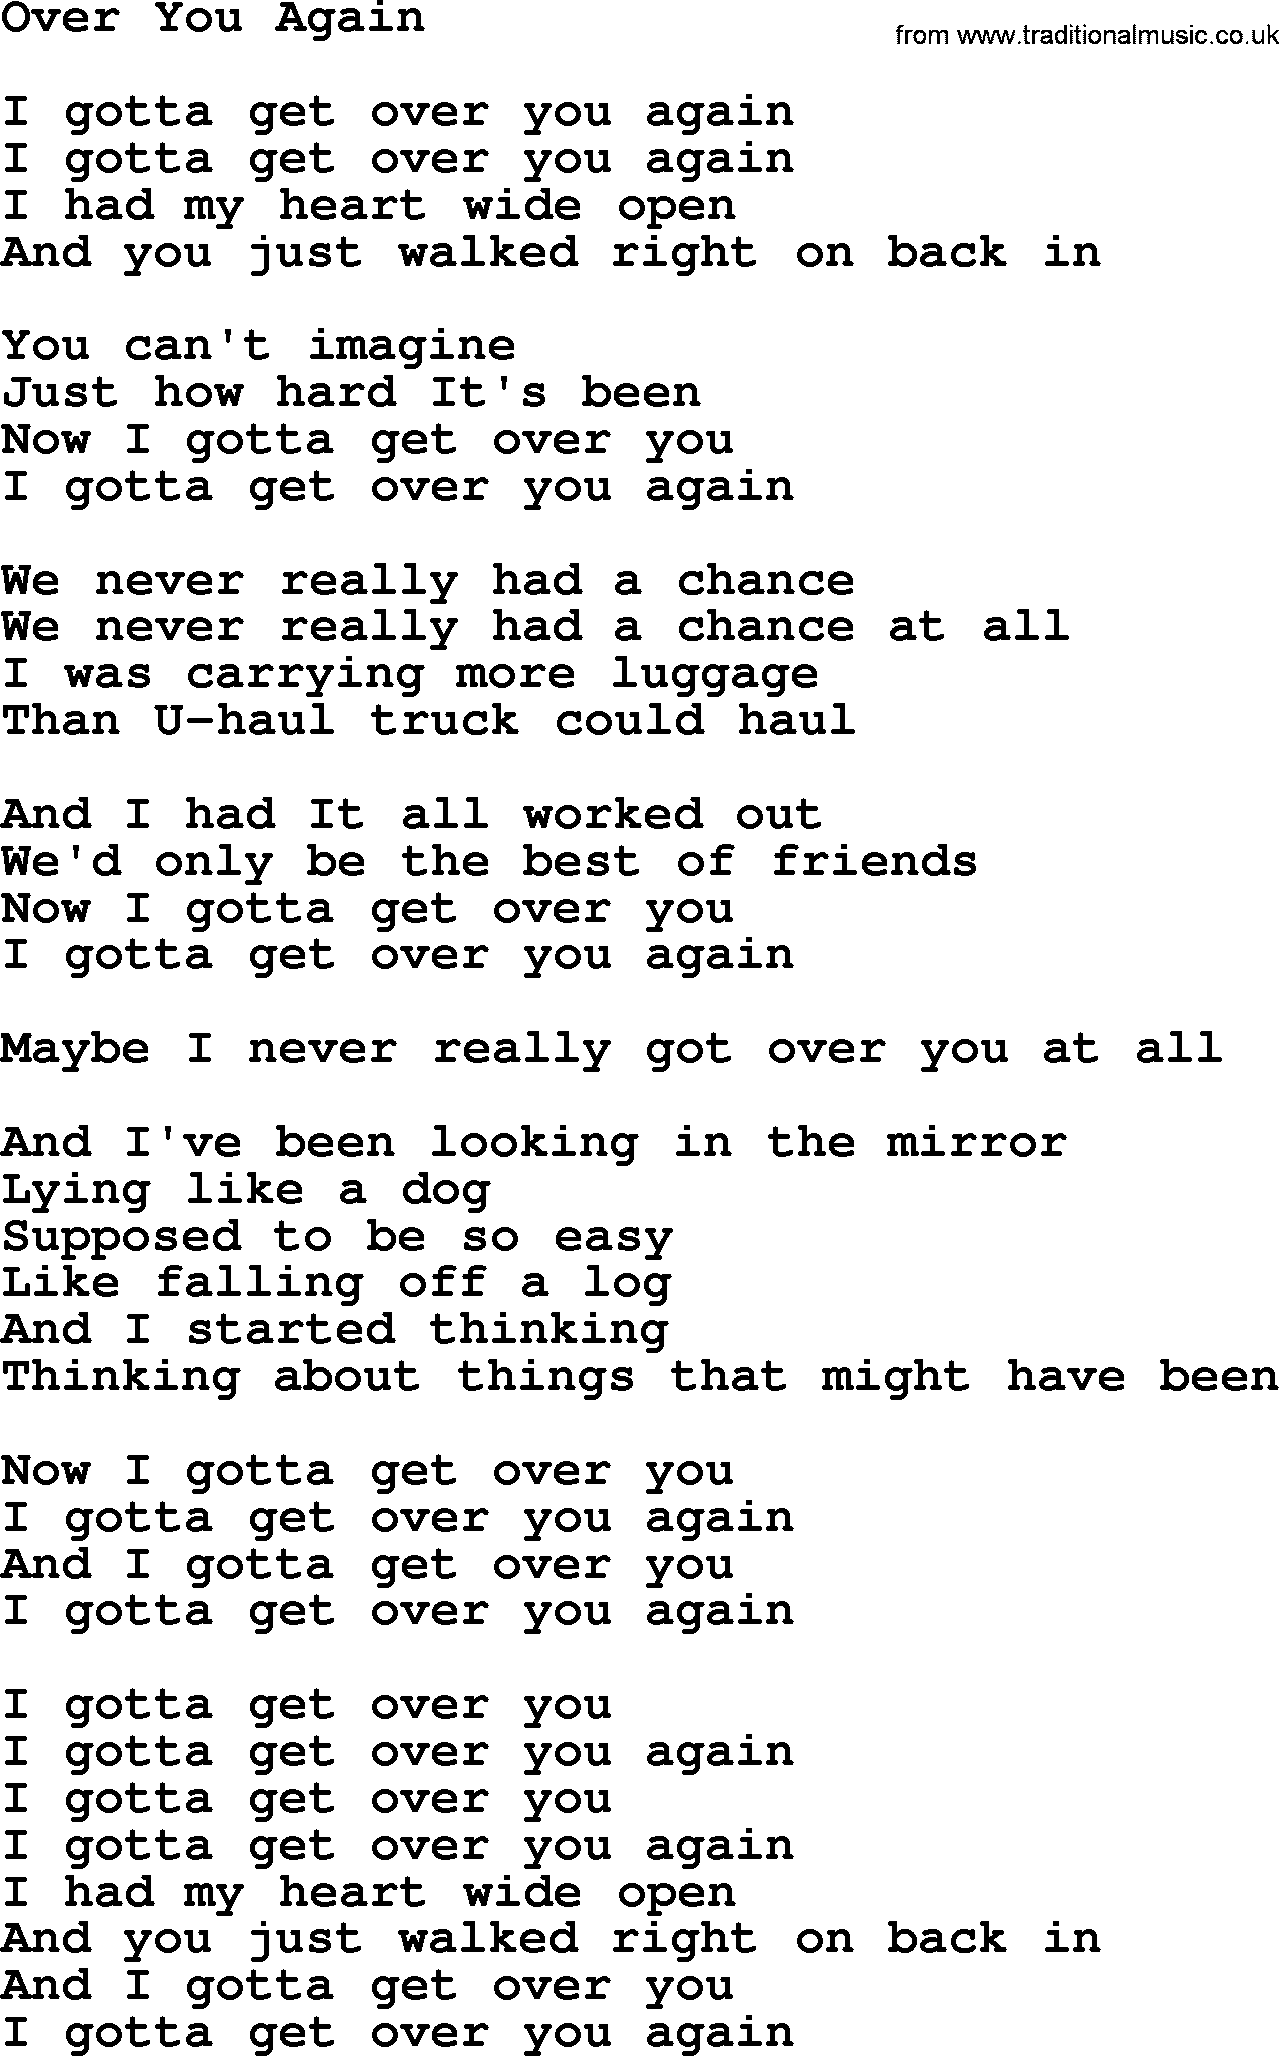 Willie Nelson song: Over You Again lyrics